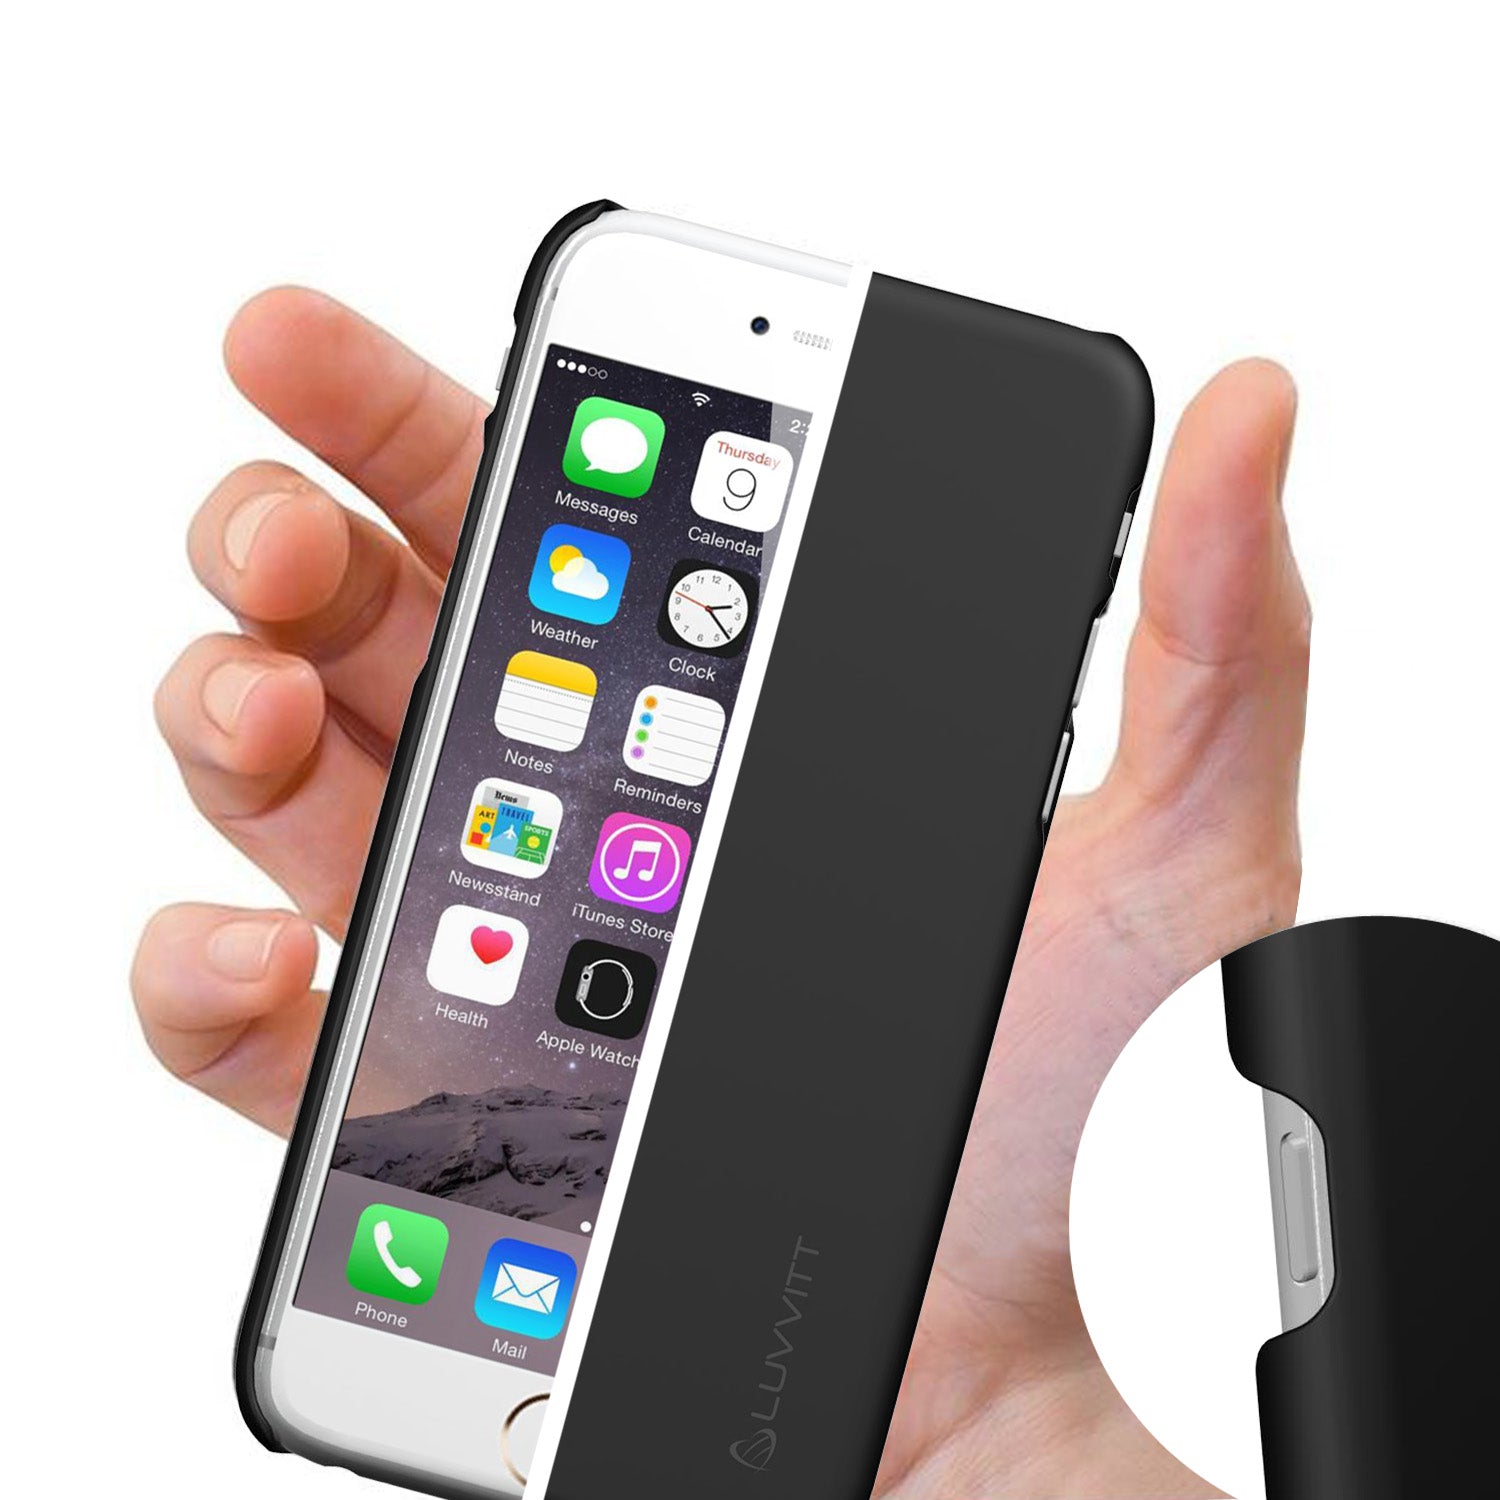 LUVVITT SVELTE Hard Slim Fit Premium Matte Finish Case for iPhone 6/6s - Black